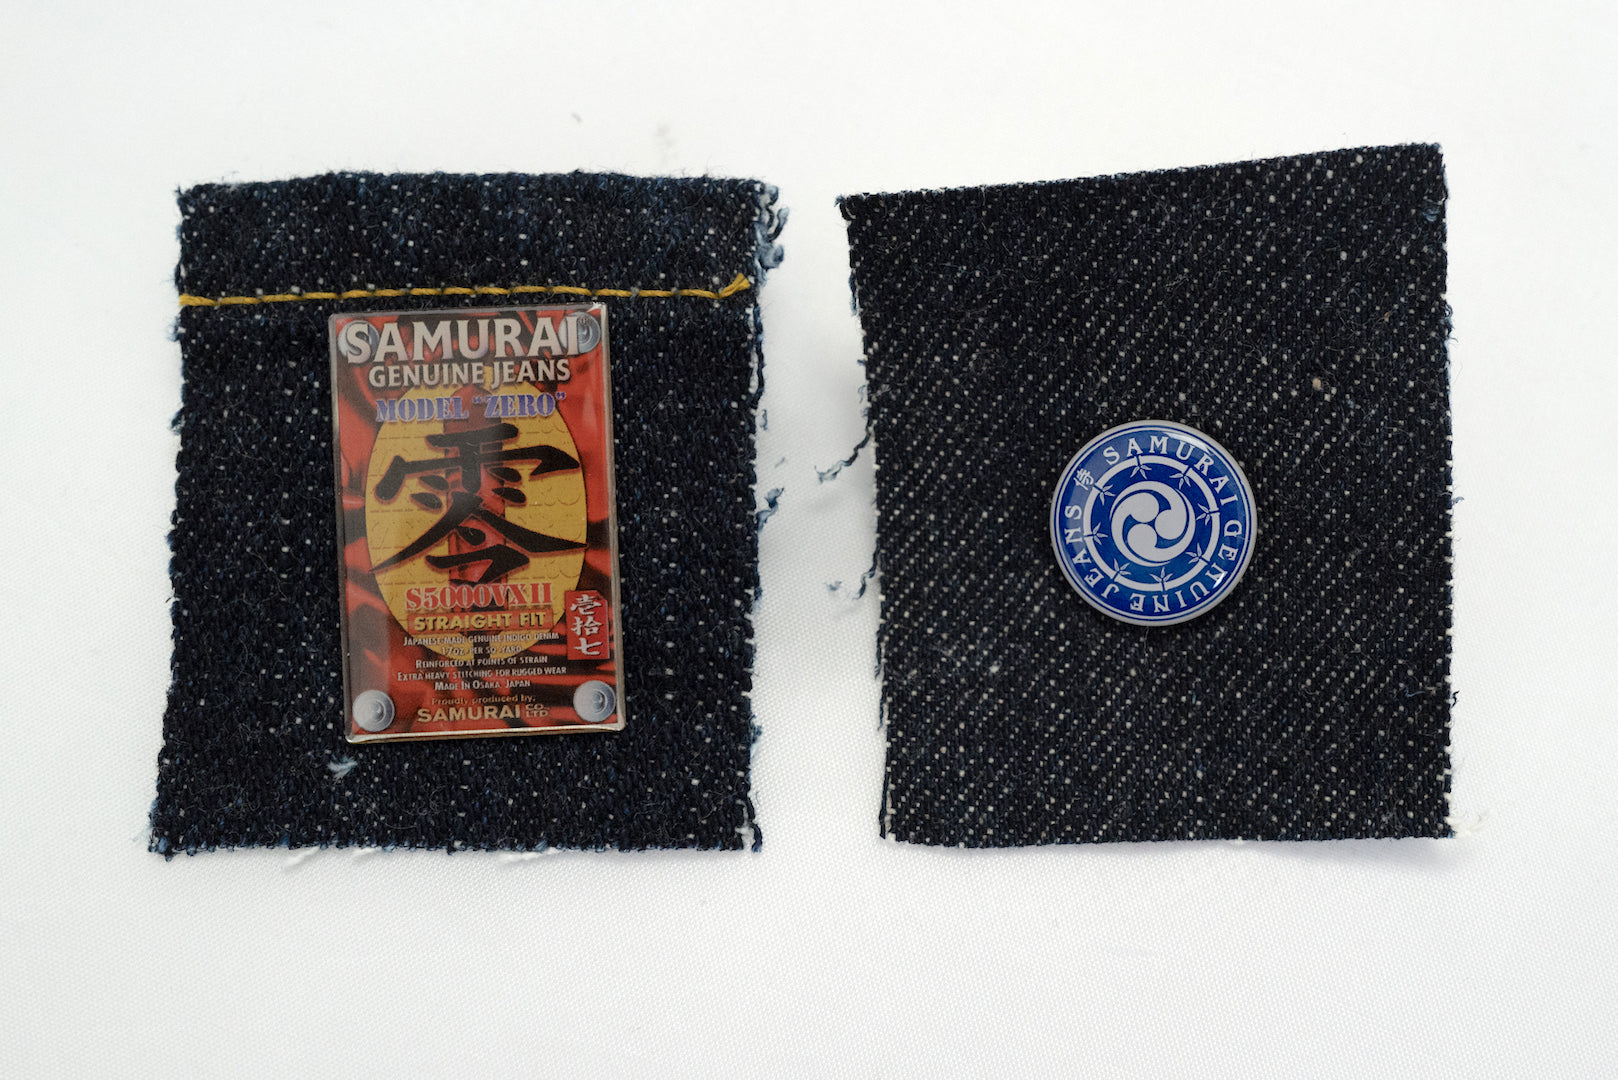 Samurai Stainless Steel Pins